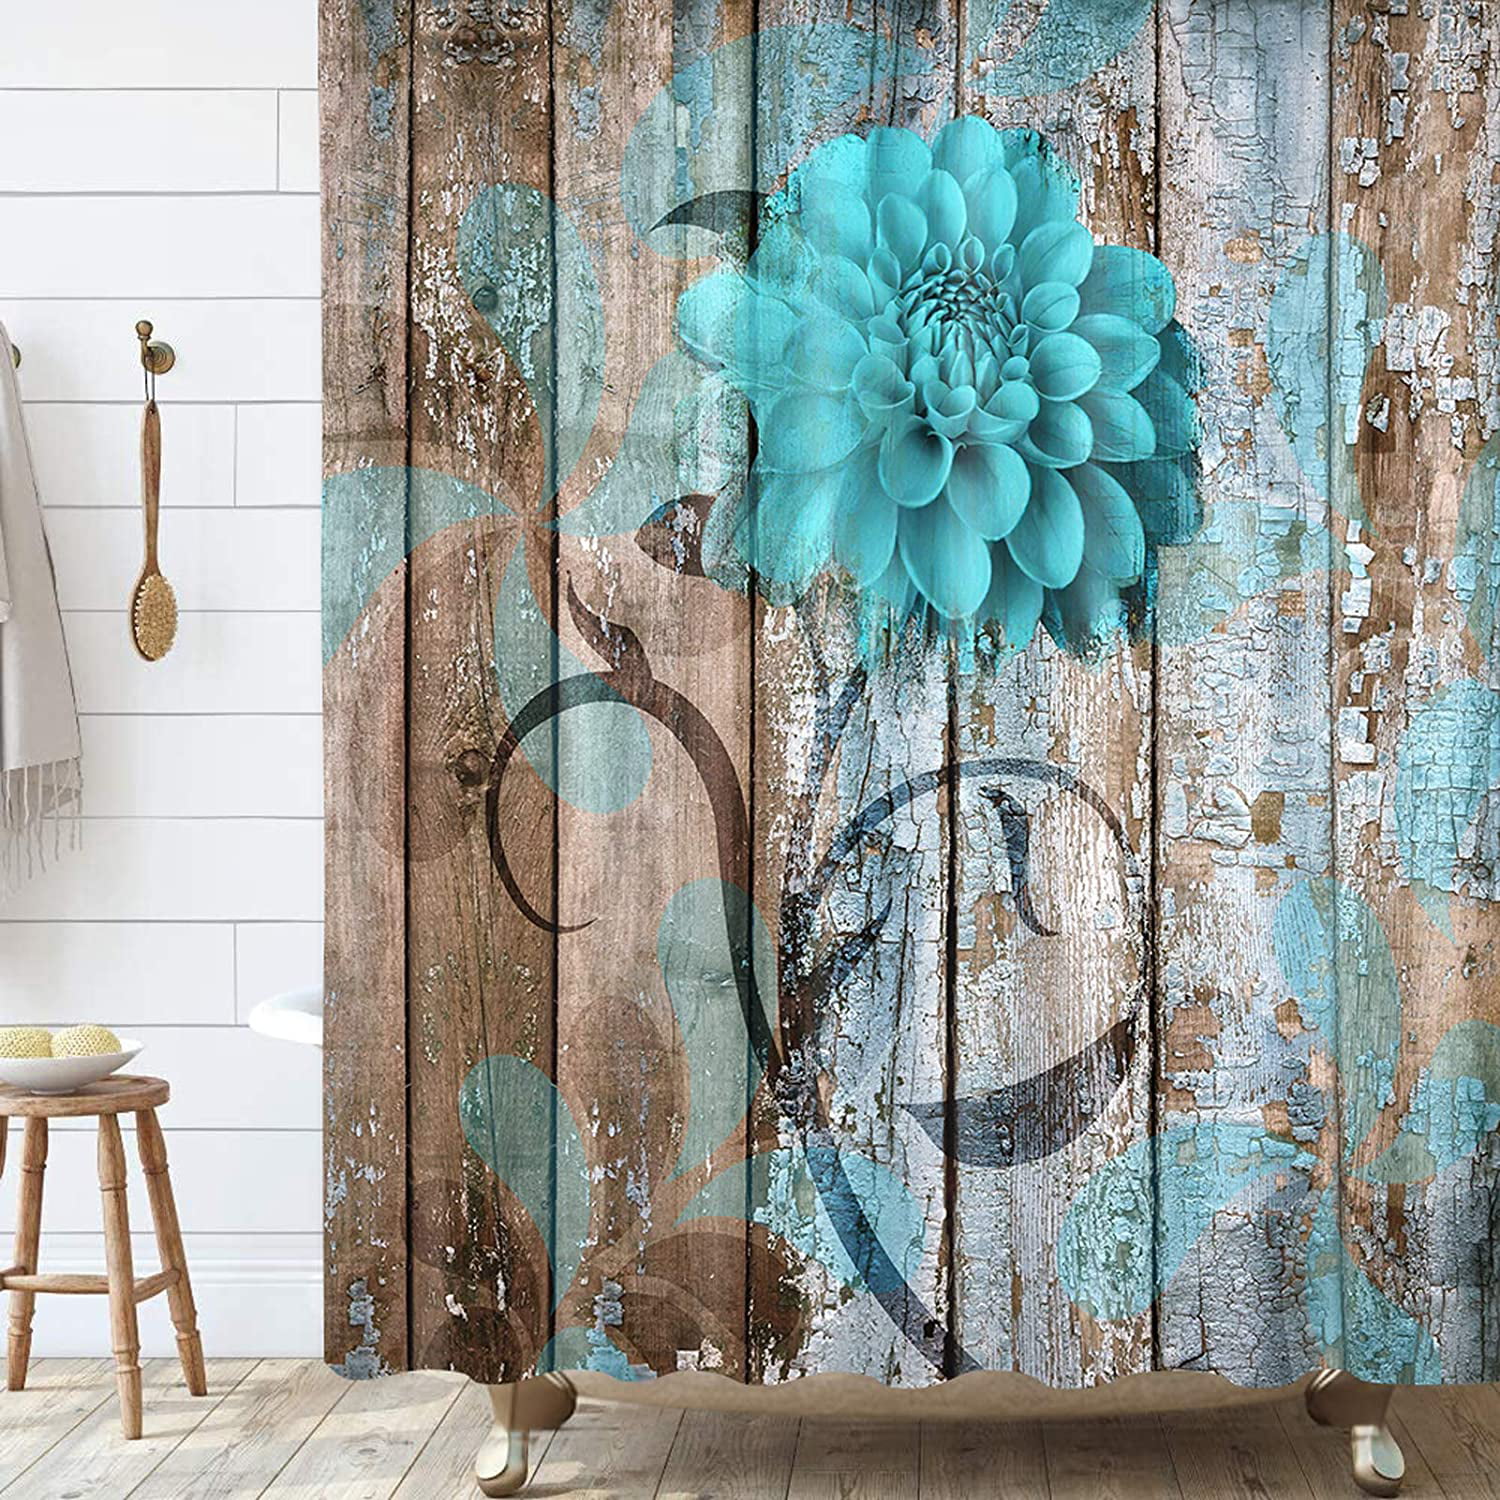 Flower Rustic Wooden Board Wall Bathroom Fabric Shower Curtain & 12 Hooks 71*71" 